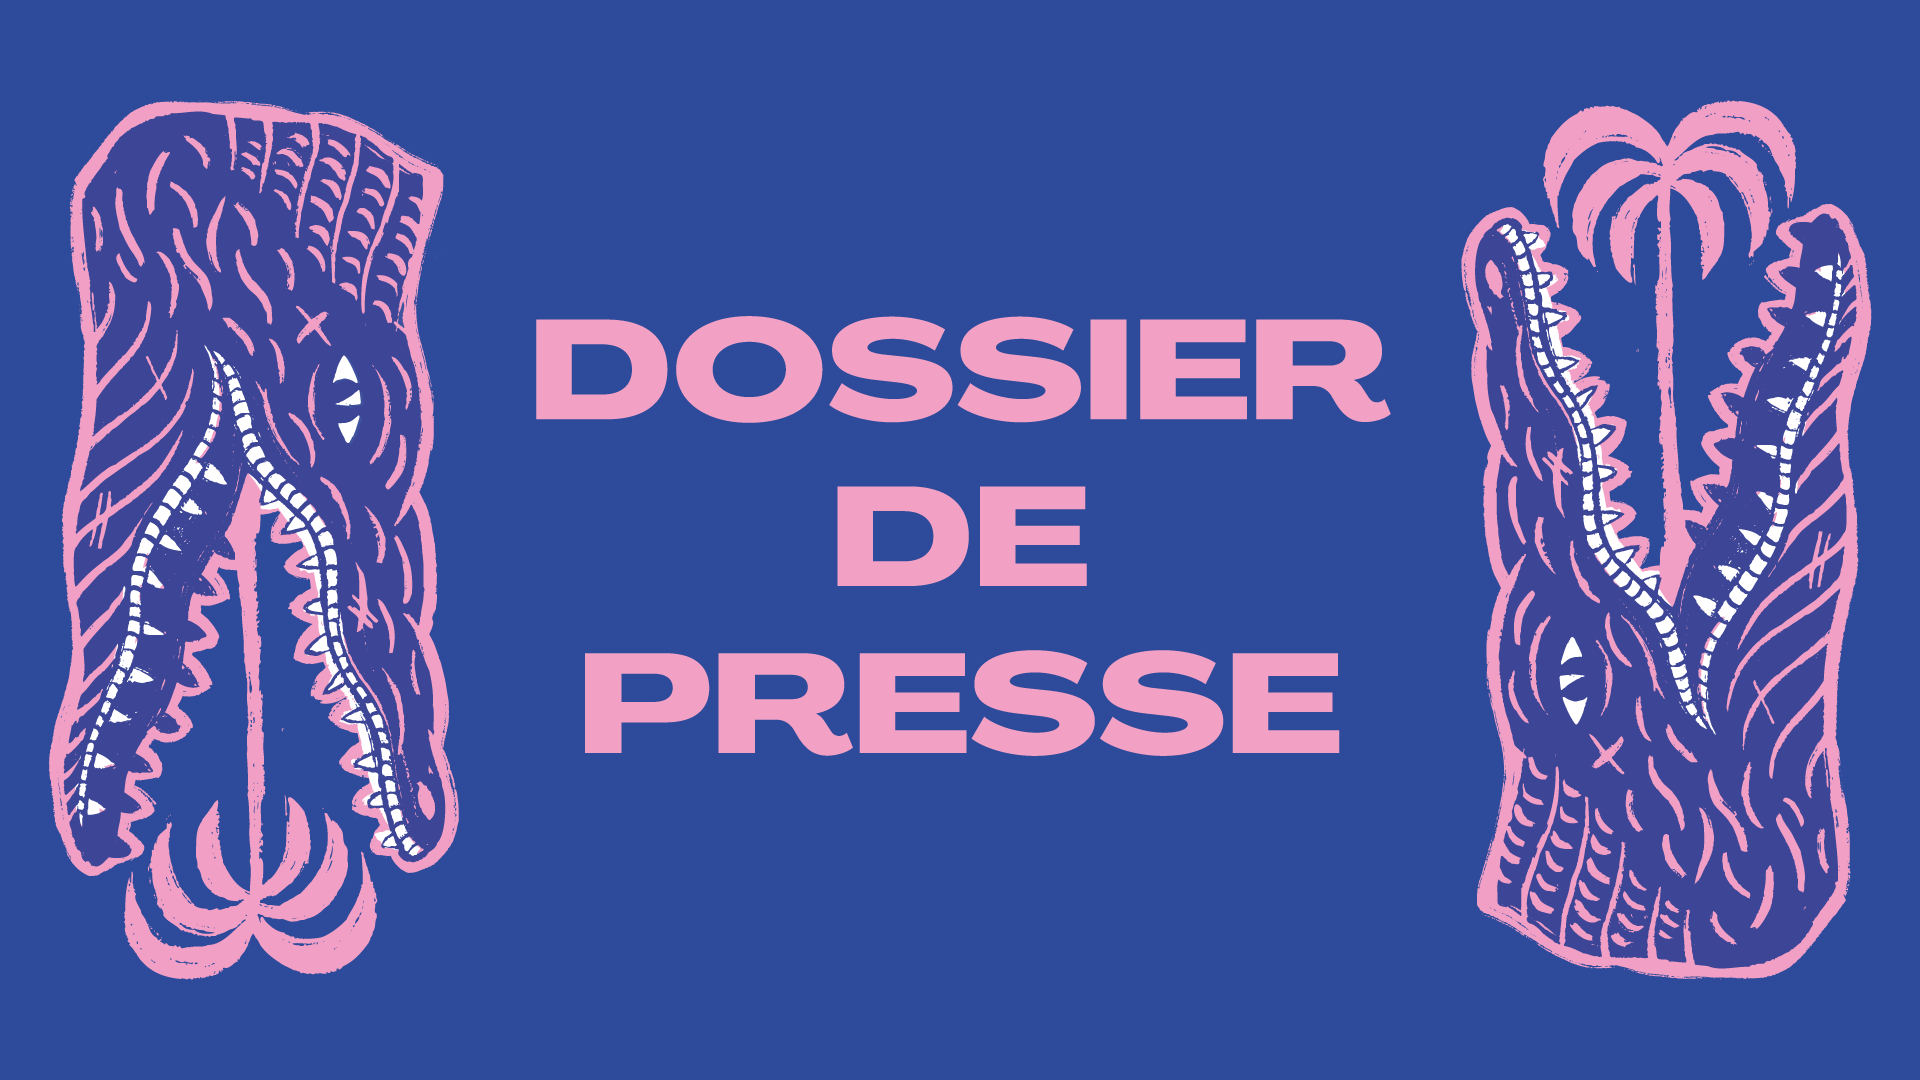 DOSSIER DE PRESSE